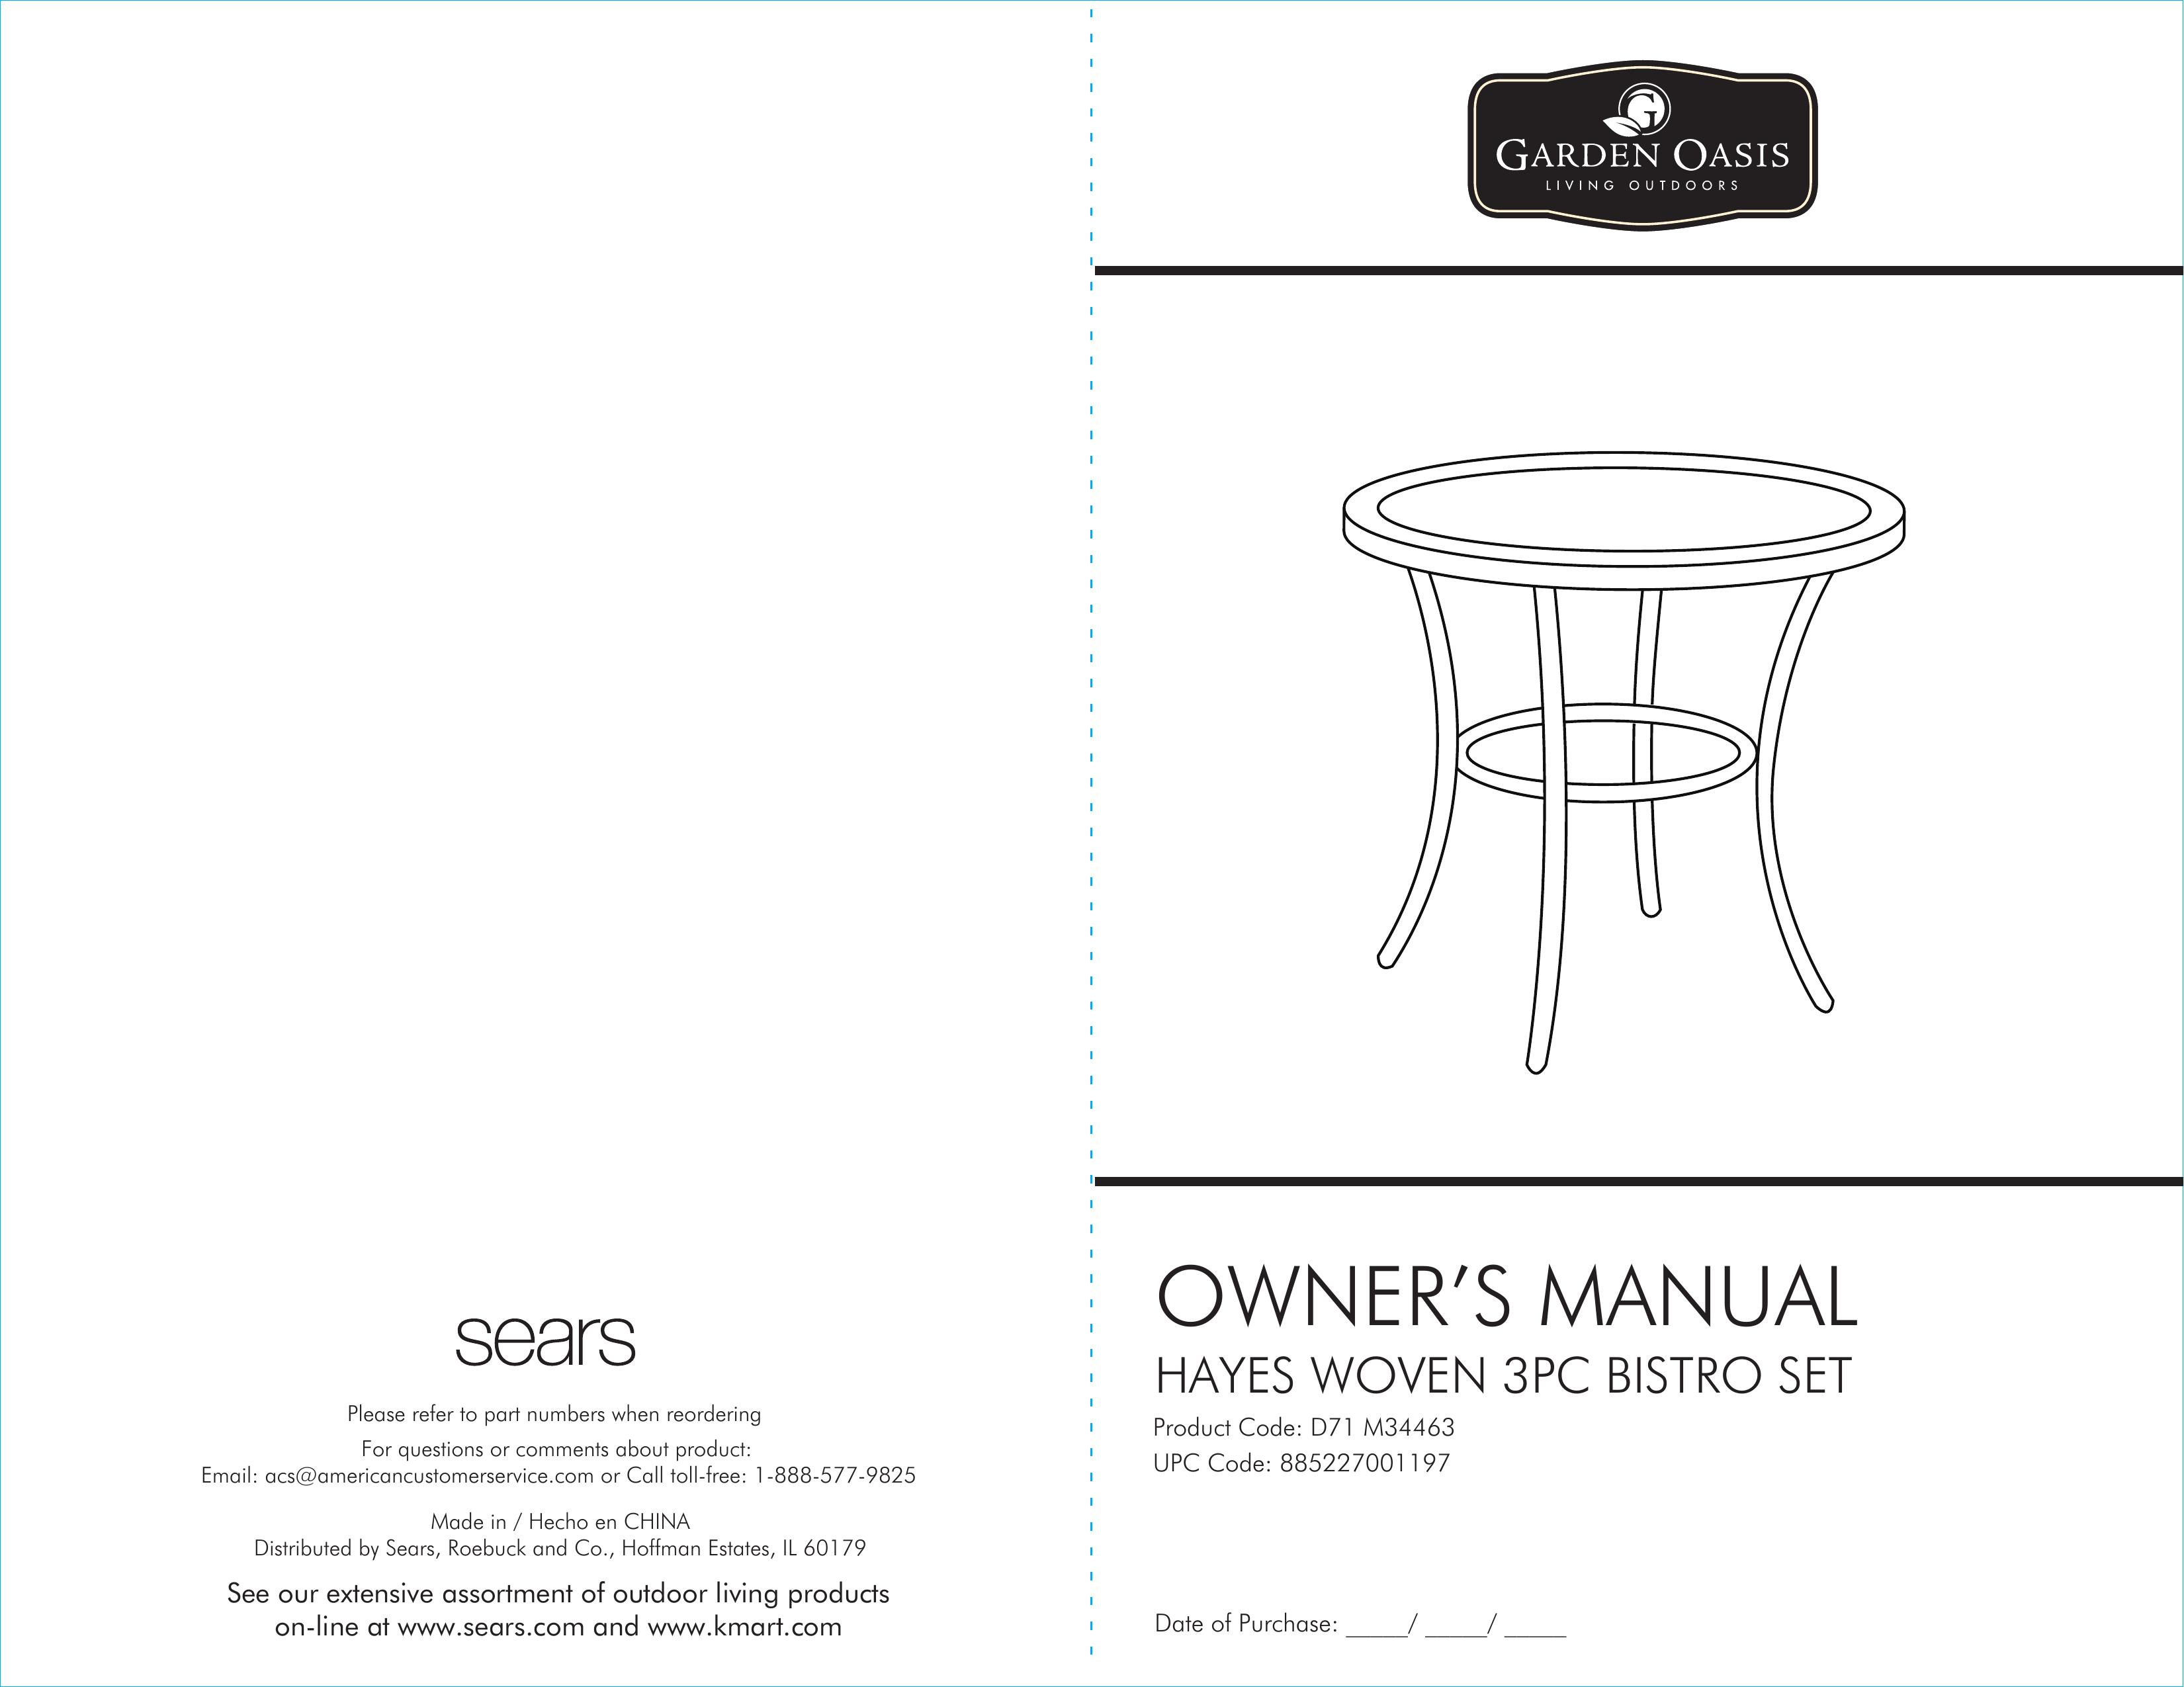 Sears D71 M34463 Patio Furniture User Manual